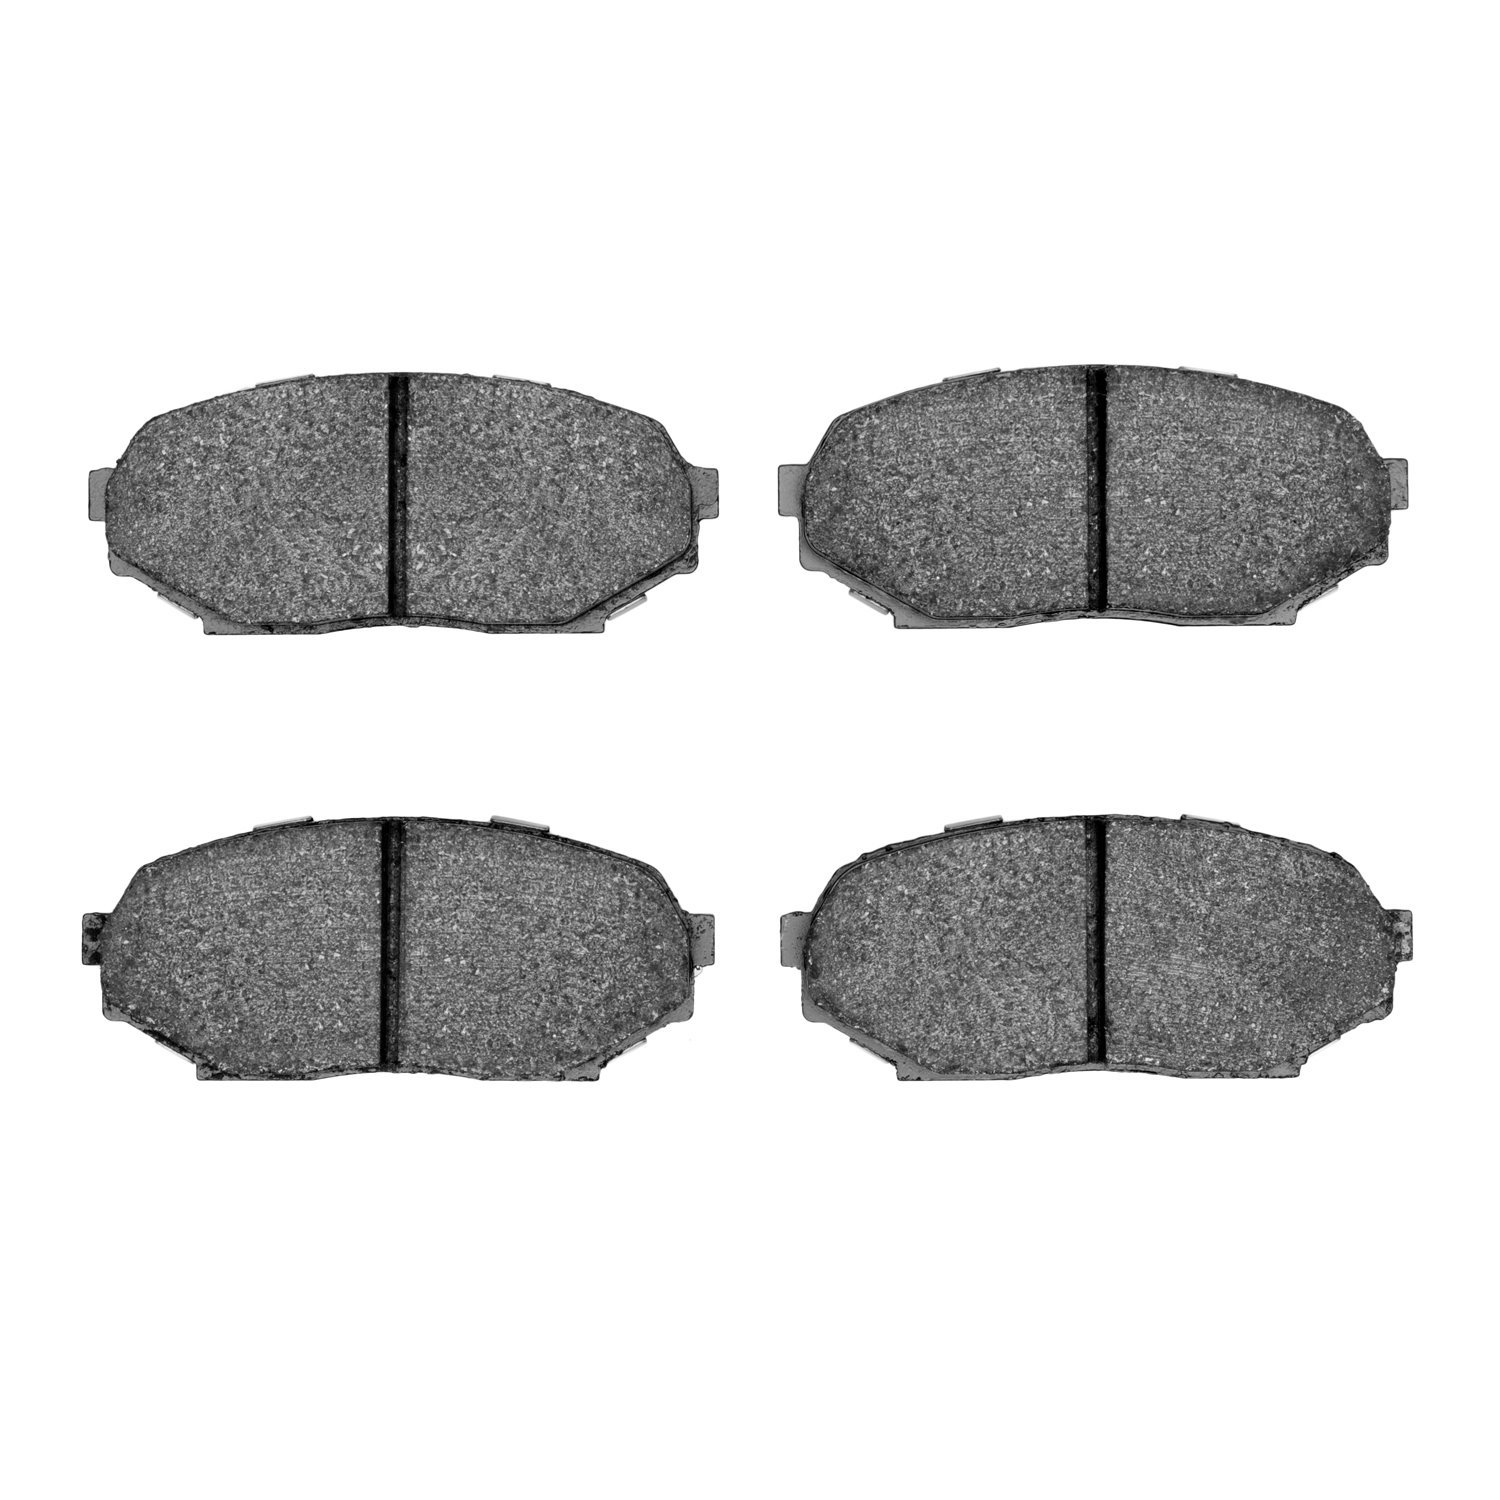 1310-0525-00 3000-Series Ceramic Brake Pads, 1989-1993 Multiple Makes/Models, Position: Front